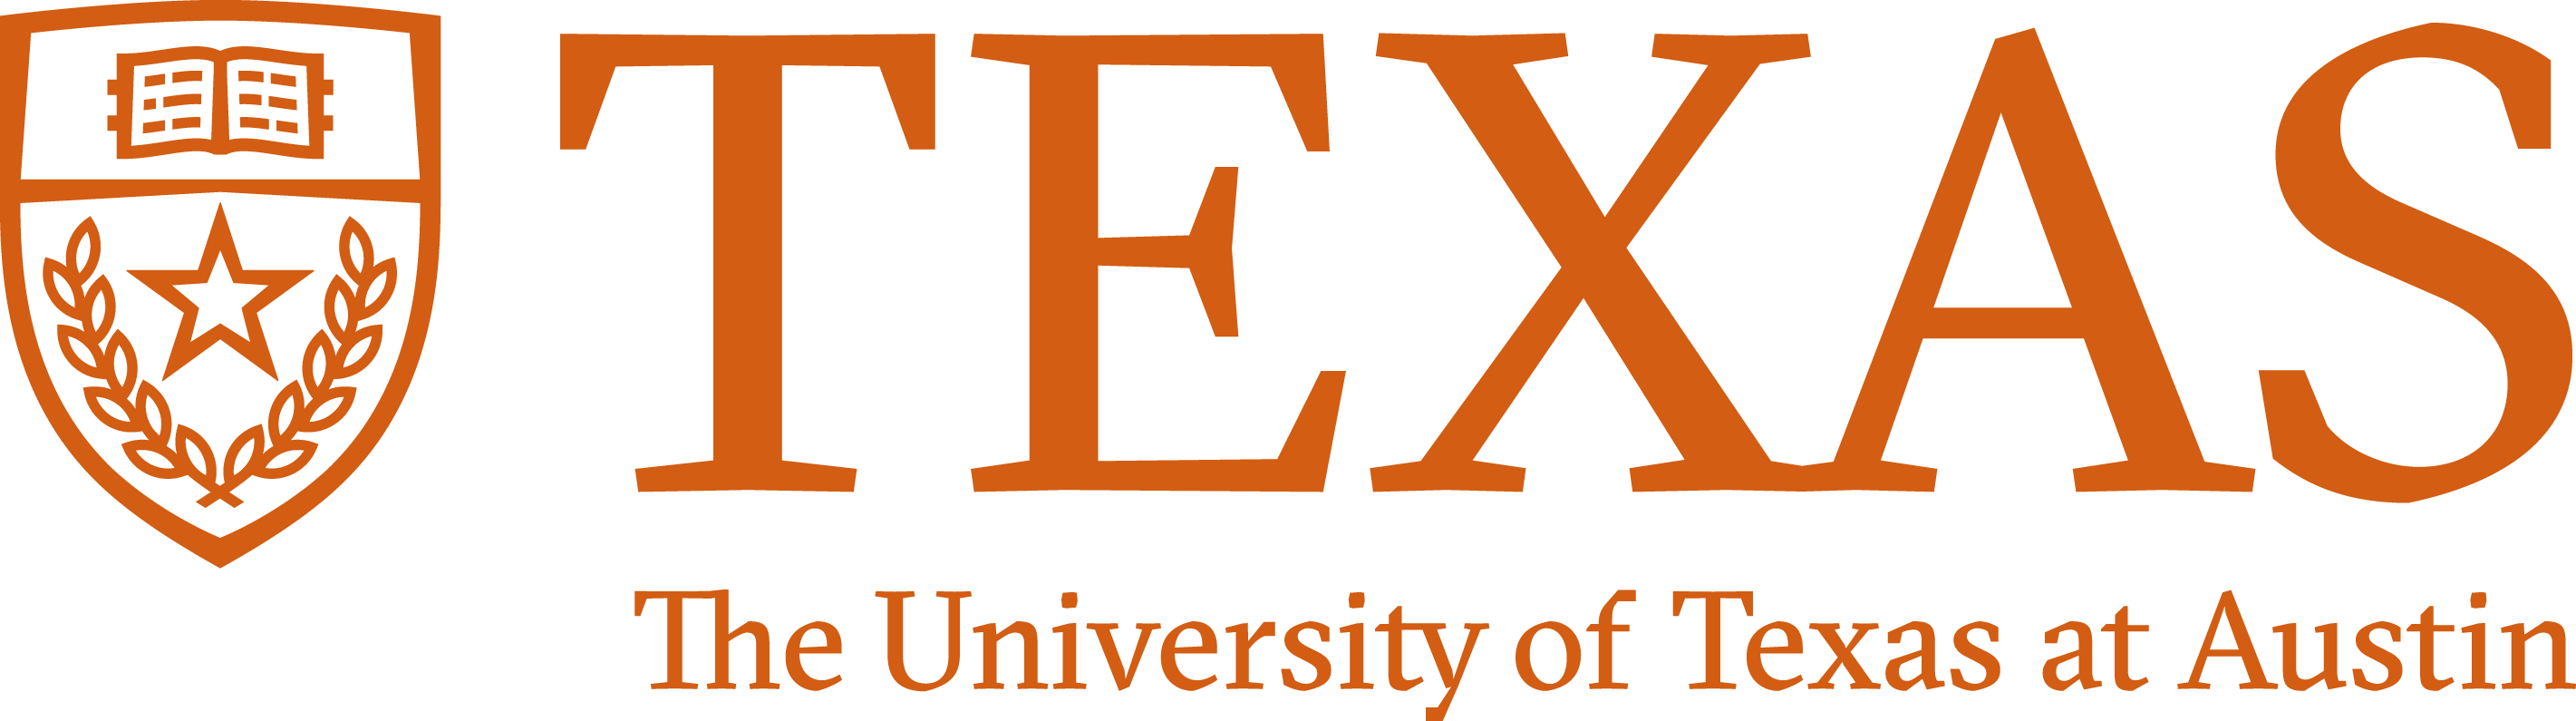 the-university-of-texas-at-austin-logo - STAR نیٹ ورک